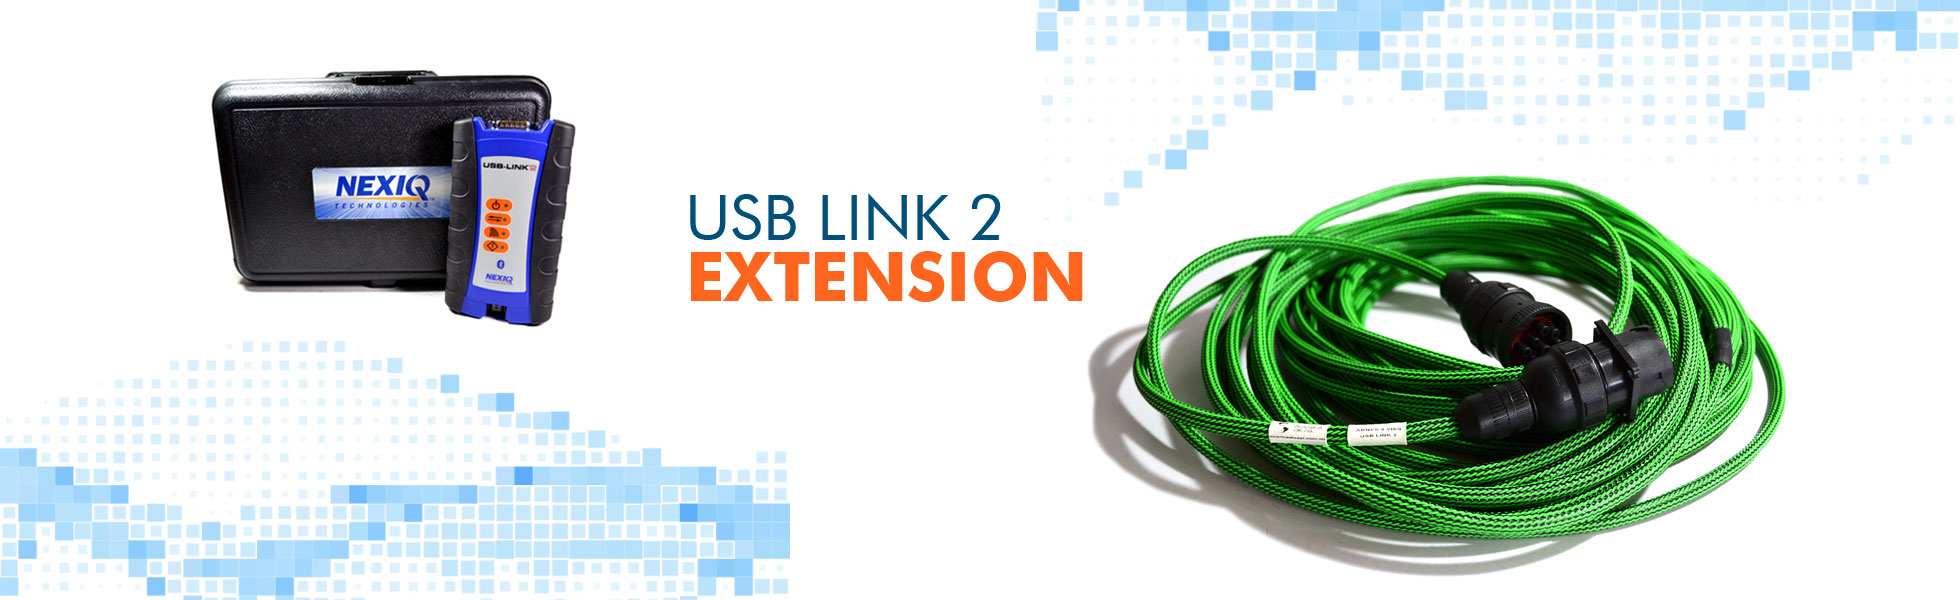 USB Link 2 Extension